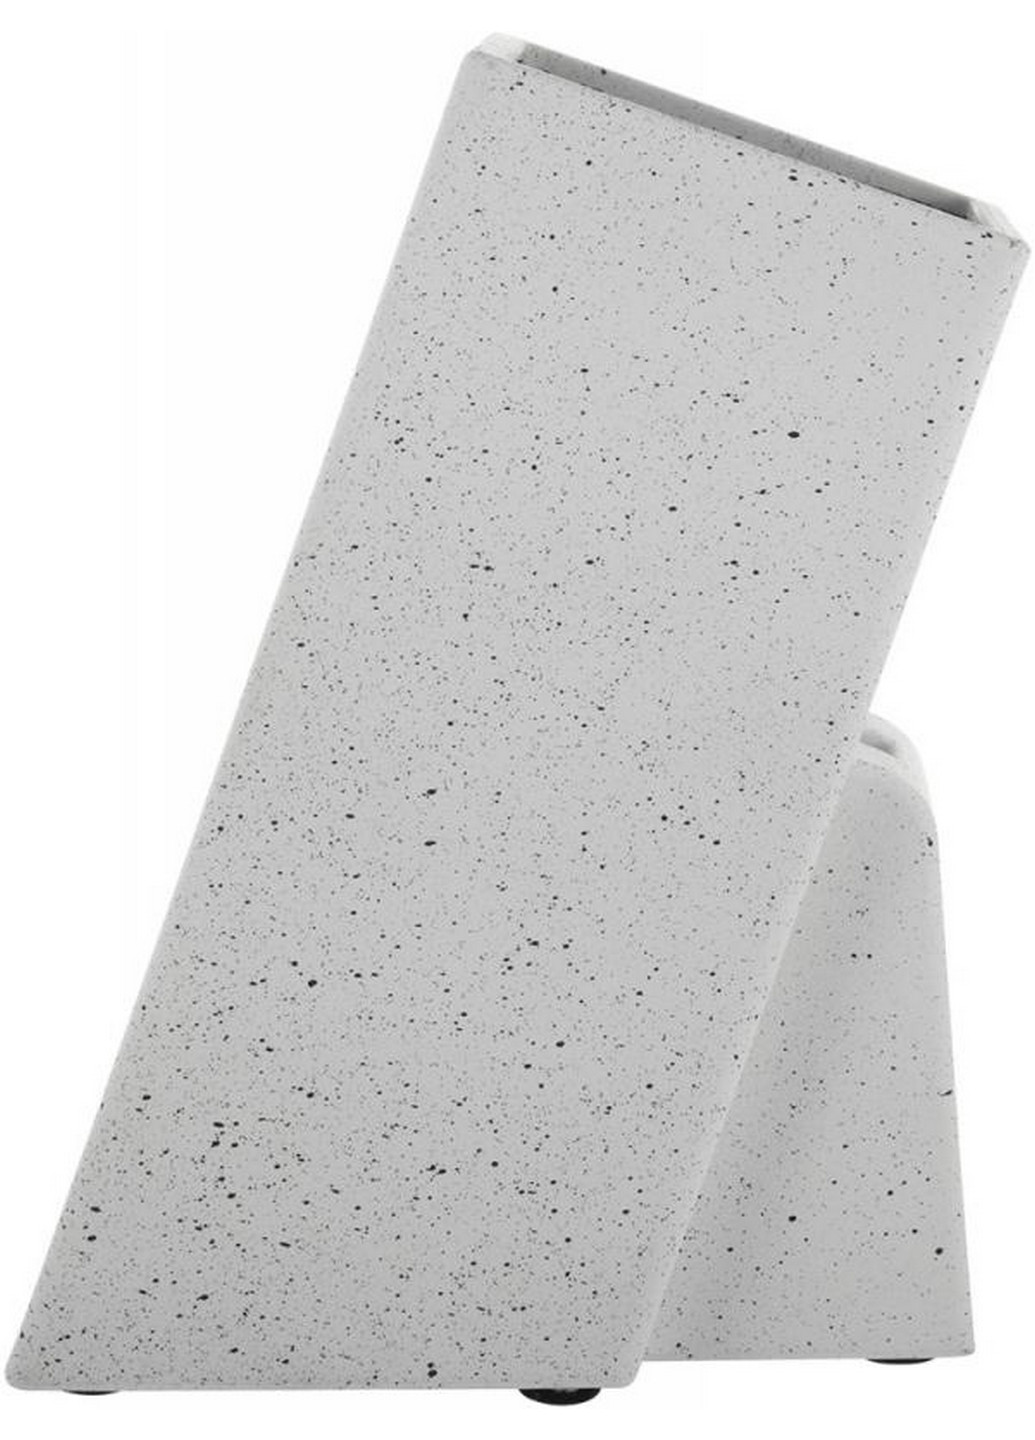 Подставка-колода для ножей Brash Stand, с наполнителем 10,5x10,5х26 см Kamille (267150024)